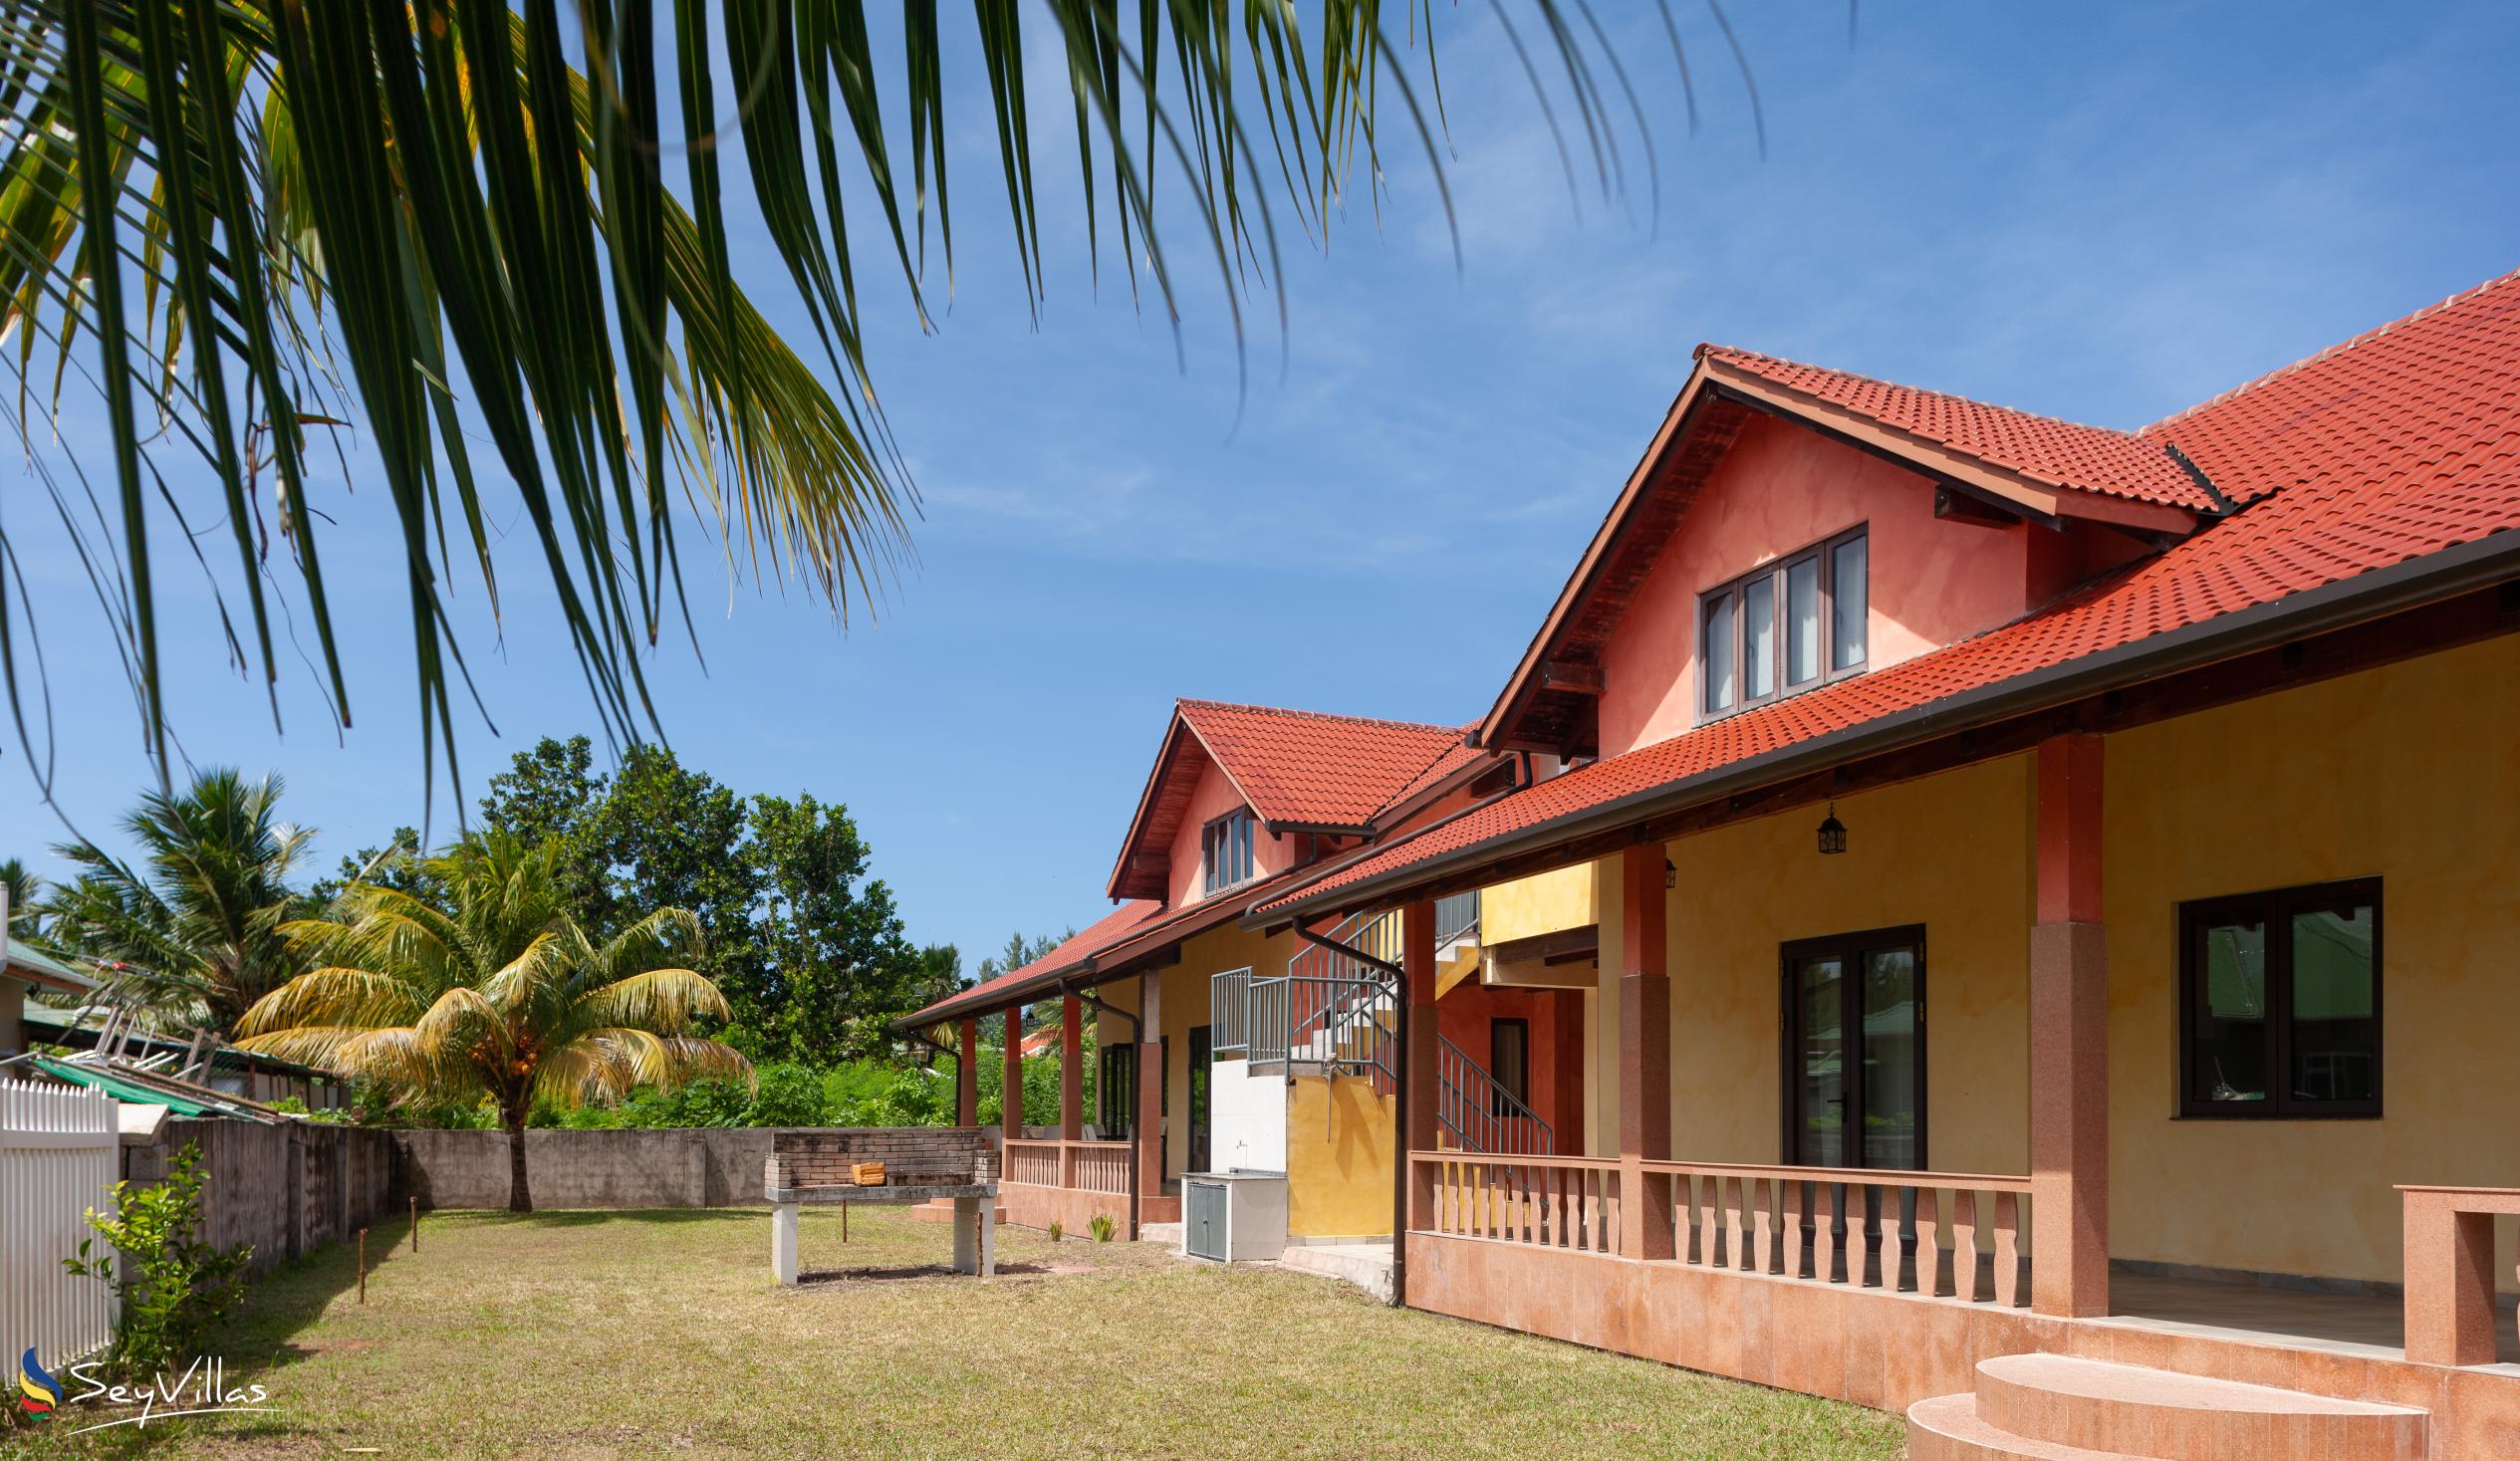 Foto 1: Villa Sole - Extérieur - Praslin (Seychelles)